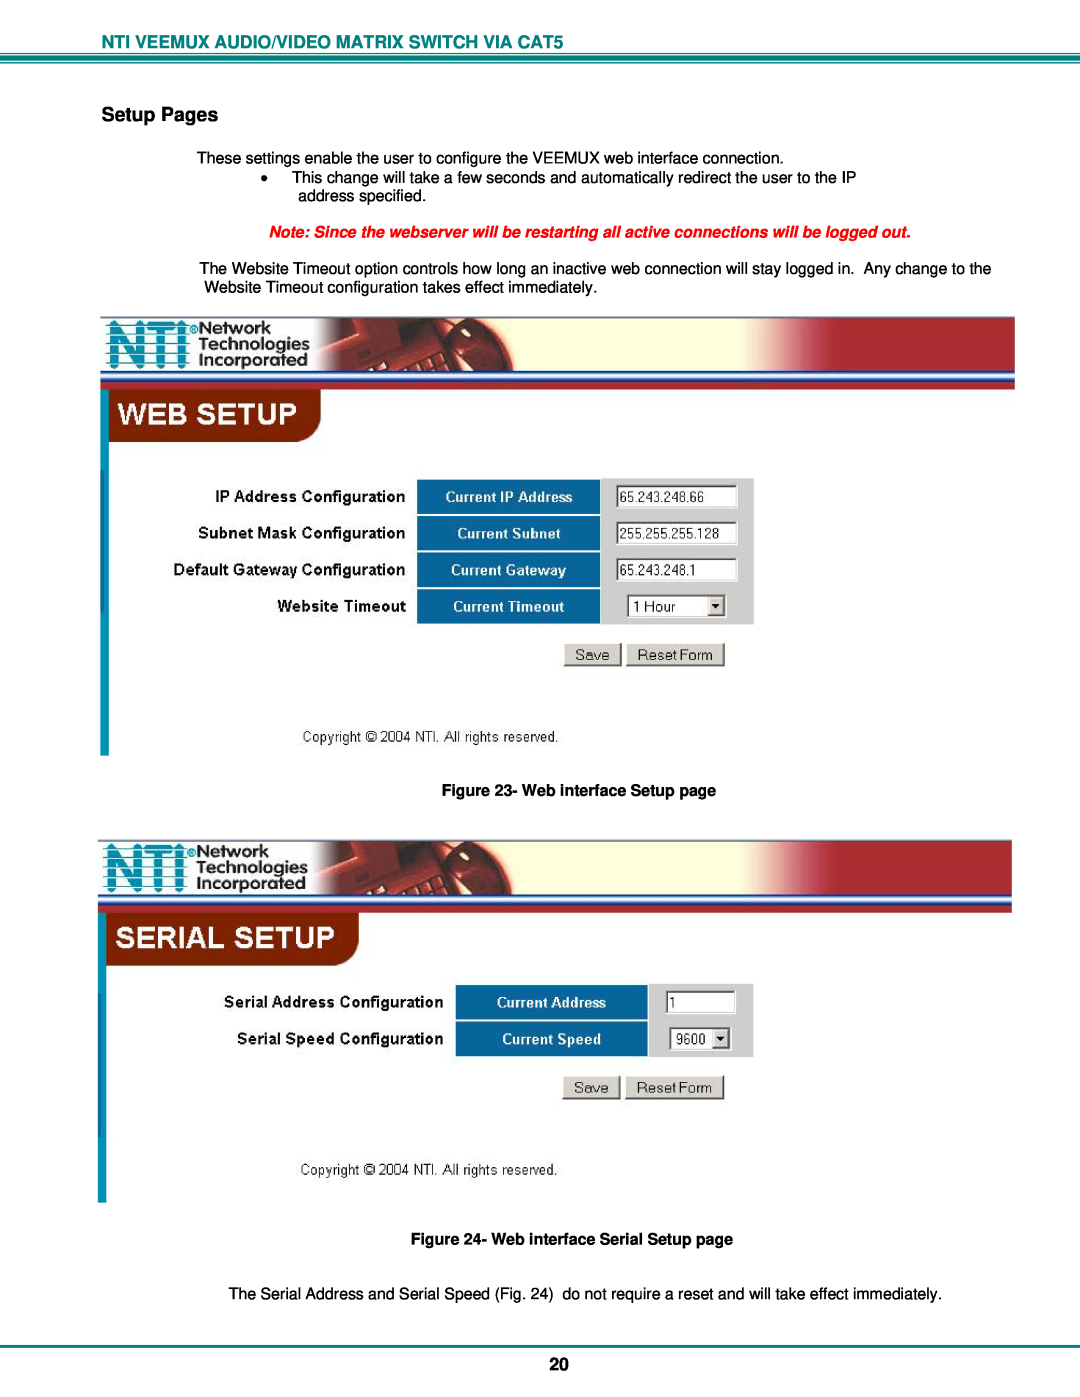 Network Technologies SM-nXm-C5AV-LCD Setup Pages, NTI VEEMUX AUDIO/VIDEO MATRIX SWITCH VIA CAT5, Web interface Setup page 